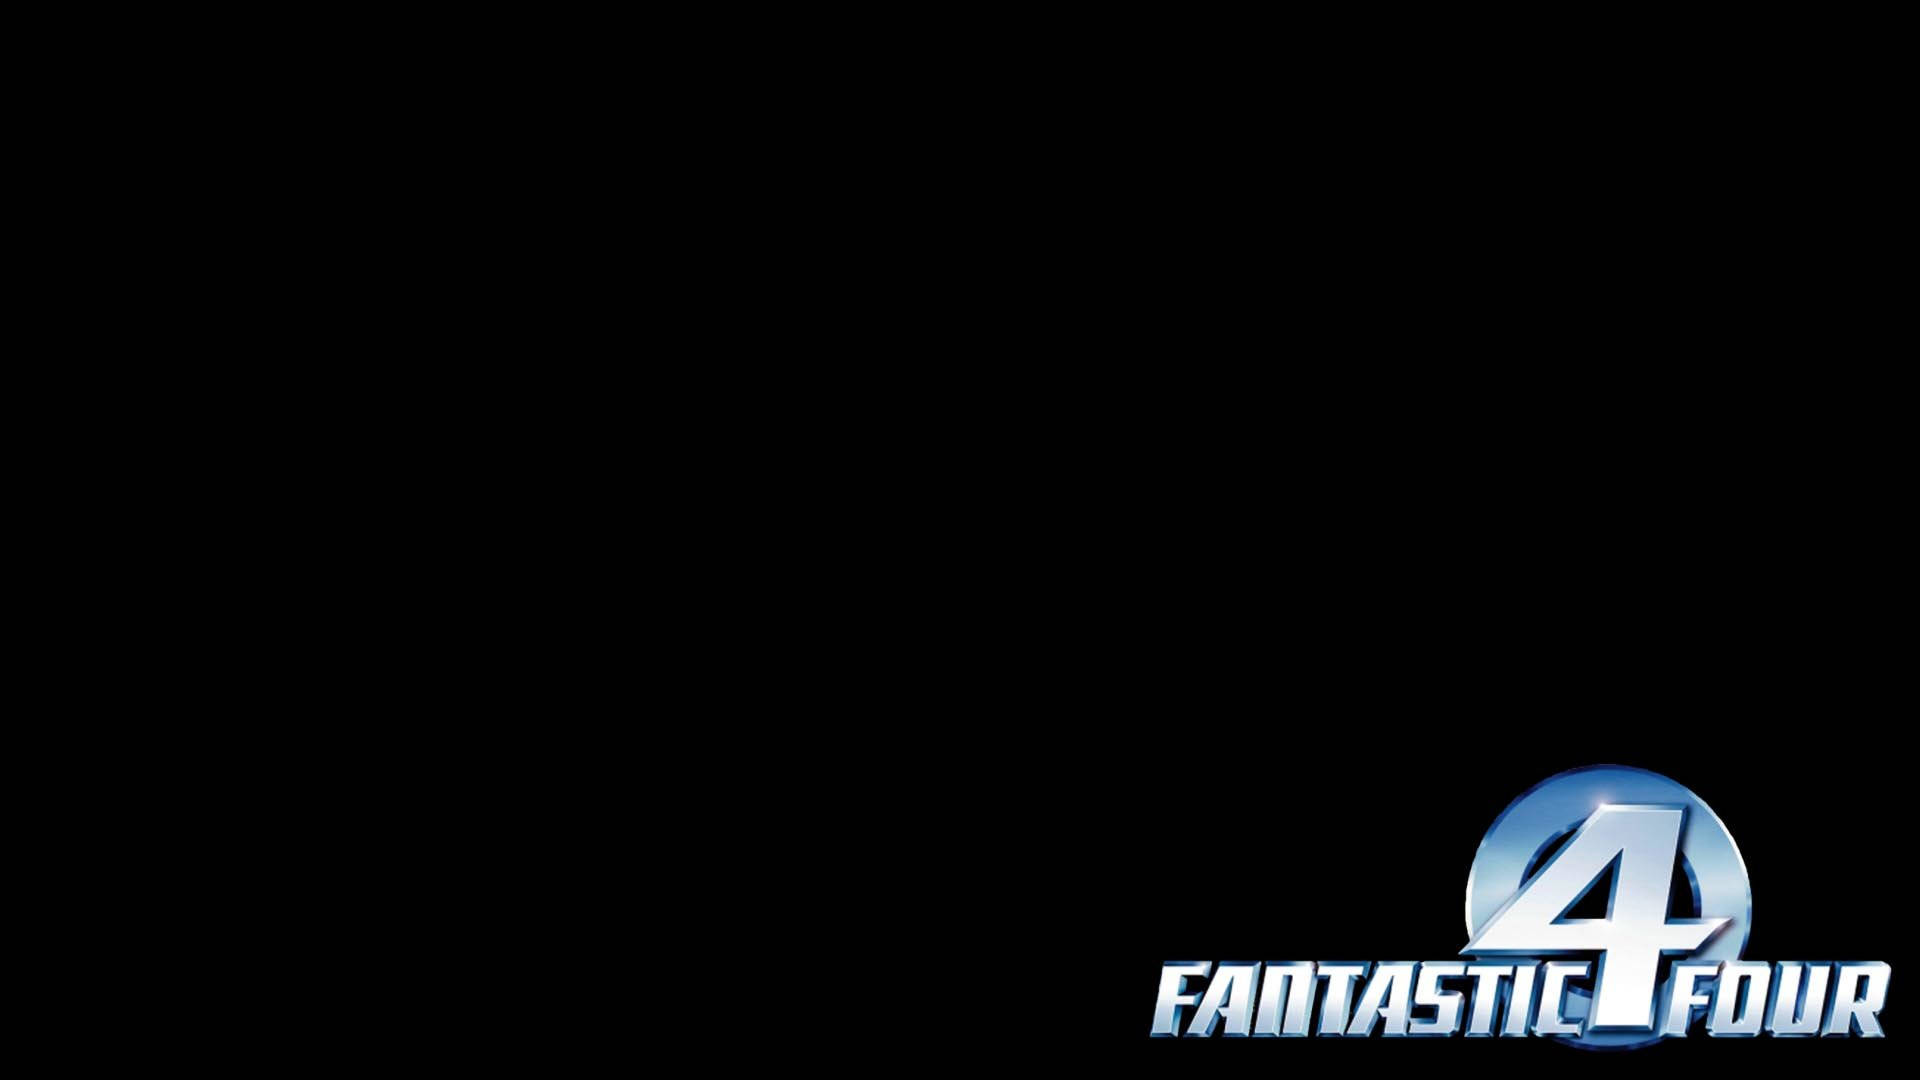 Fantastic Four Minimalist Logo